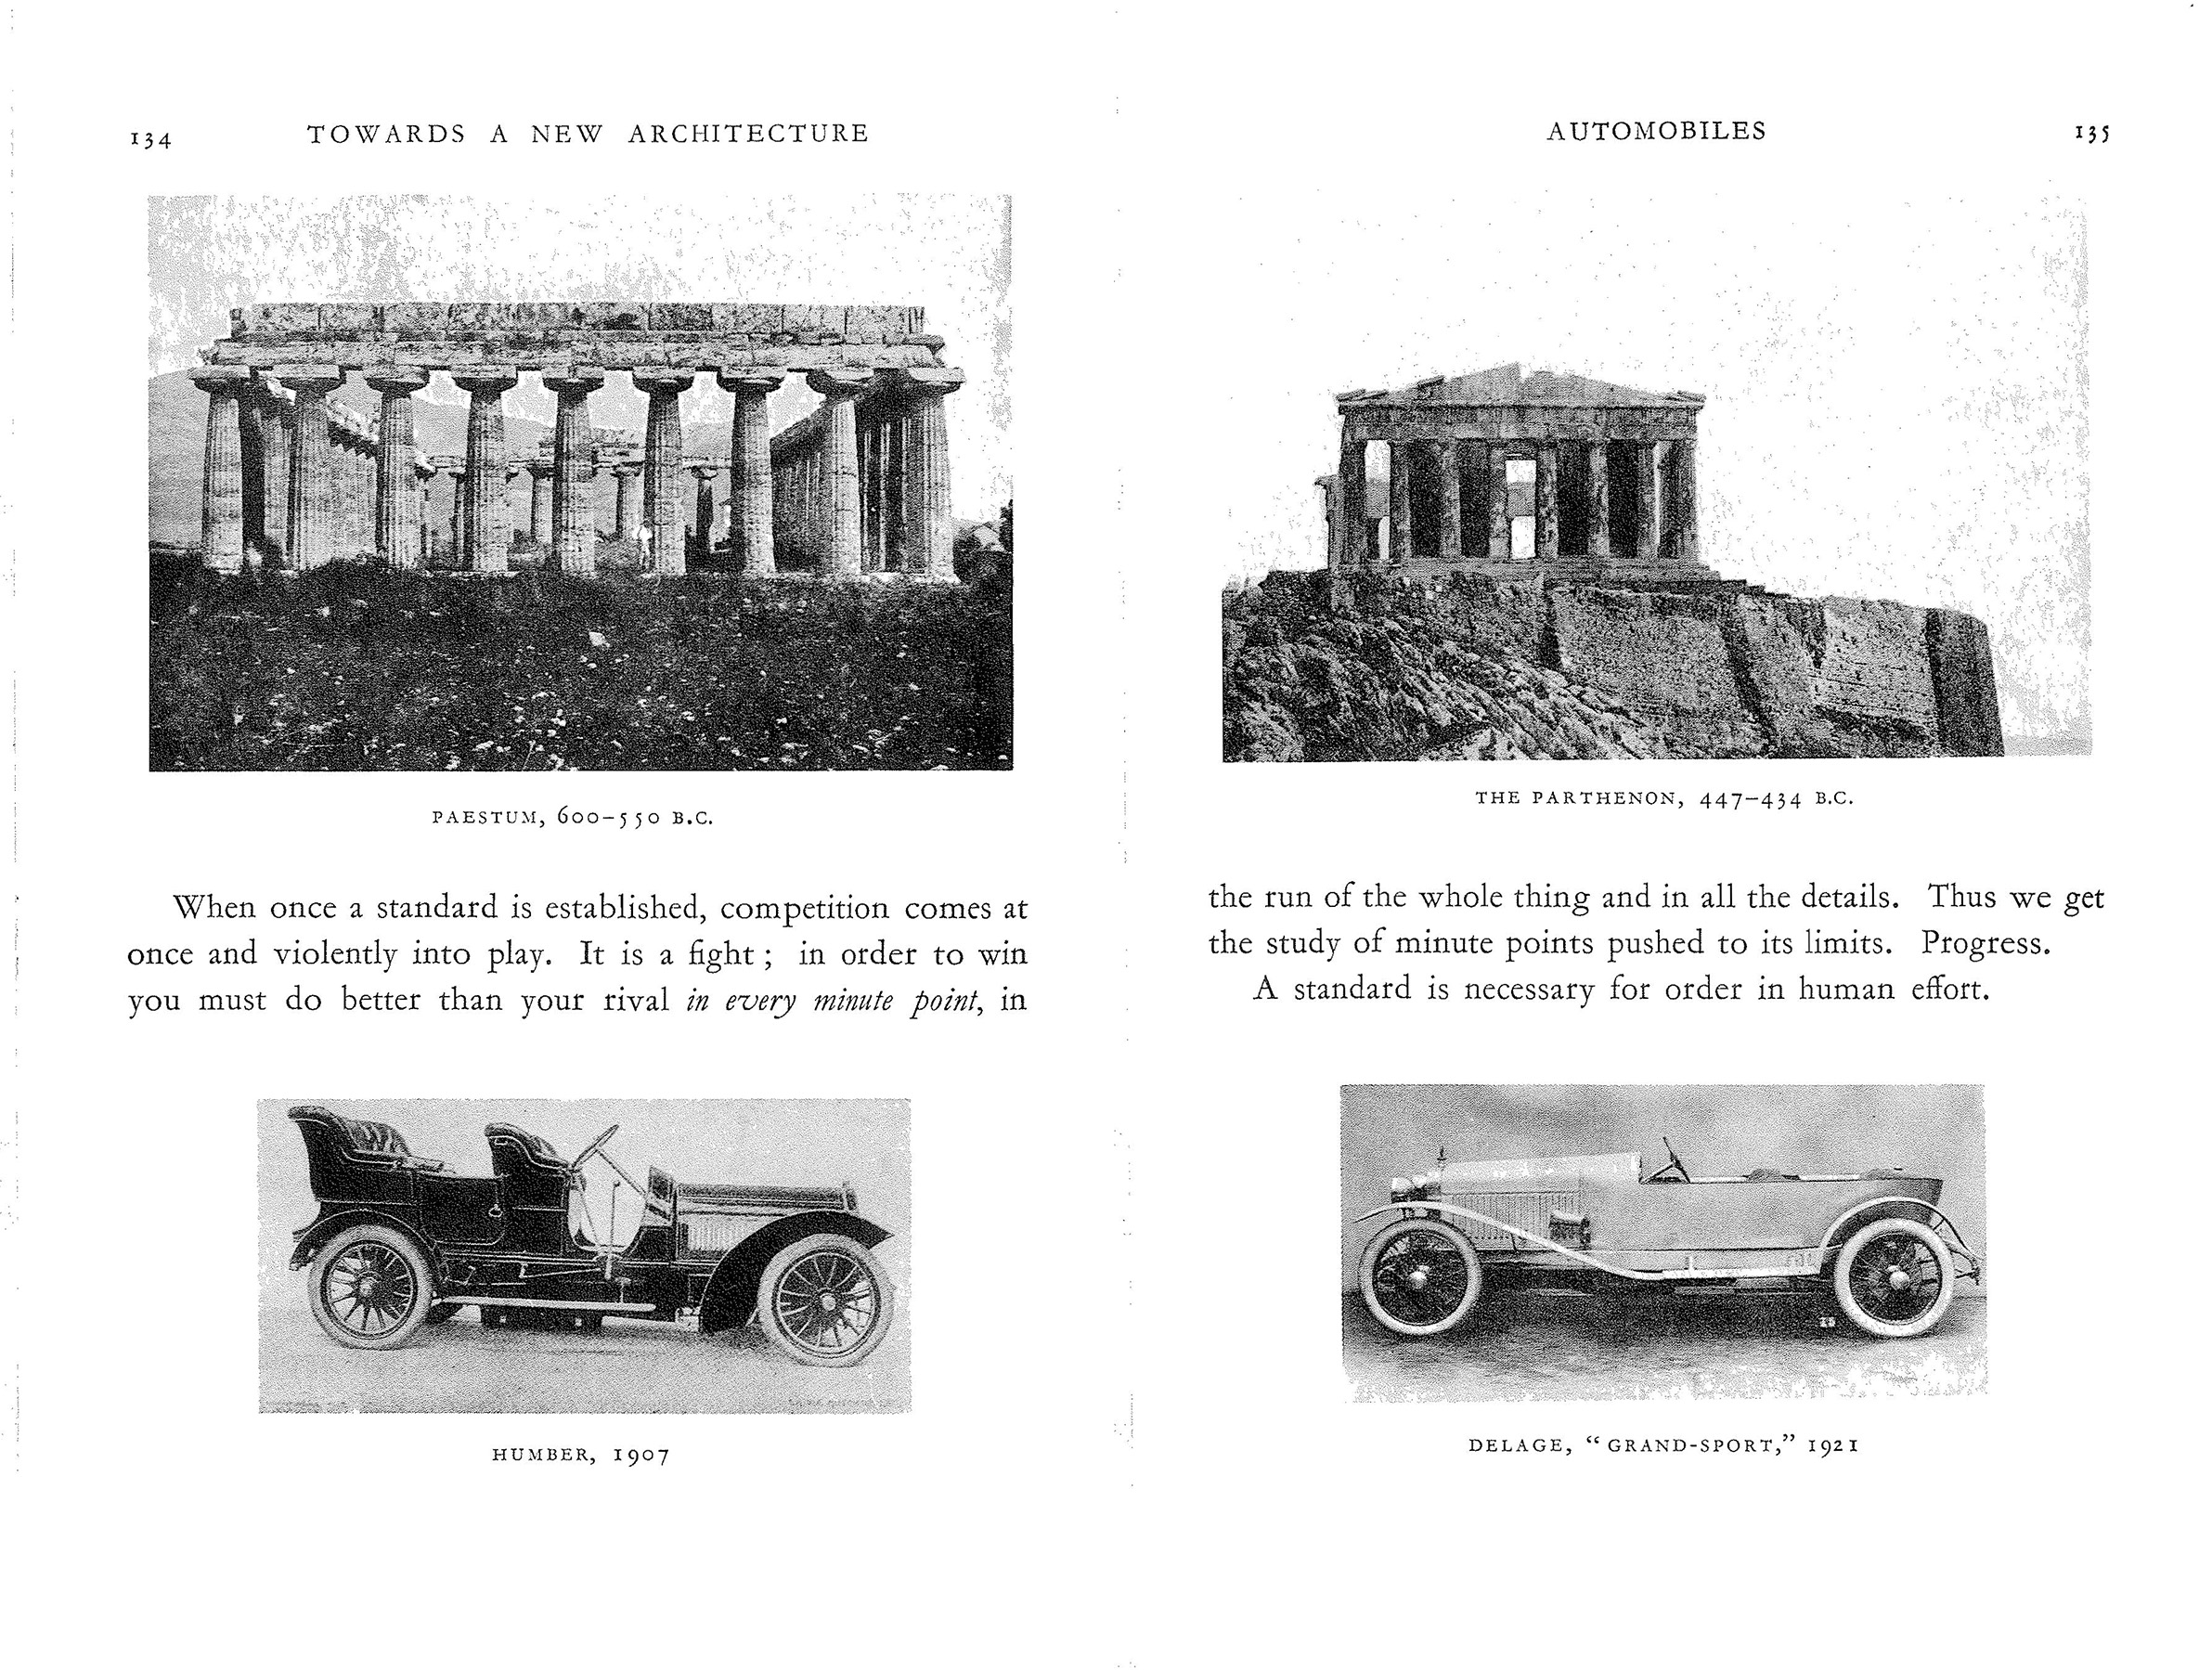 Le Corbusier, Vers une architecture (Towards a New Architecture) (New York: Dover Publications, 1923), pp. 134–35